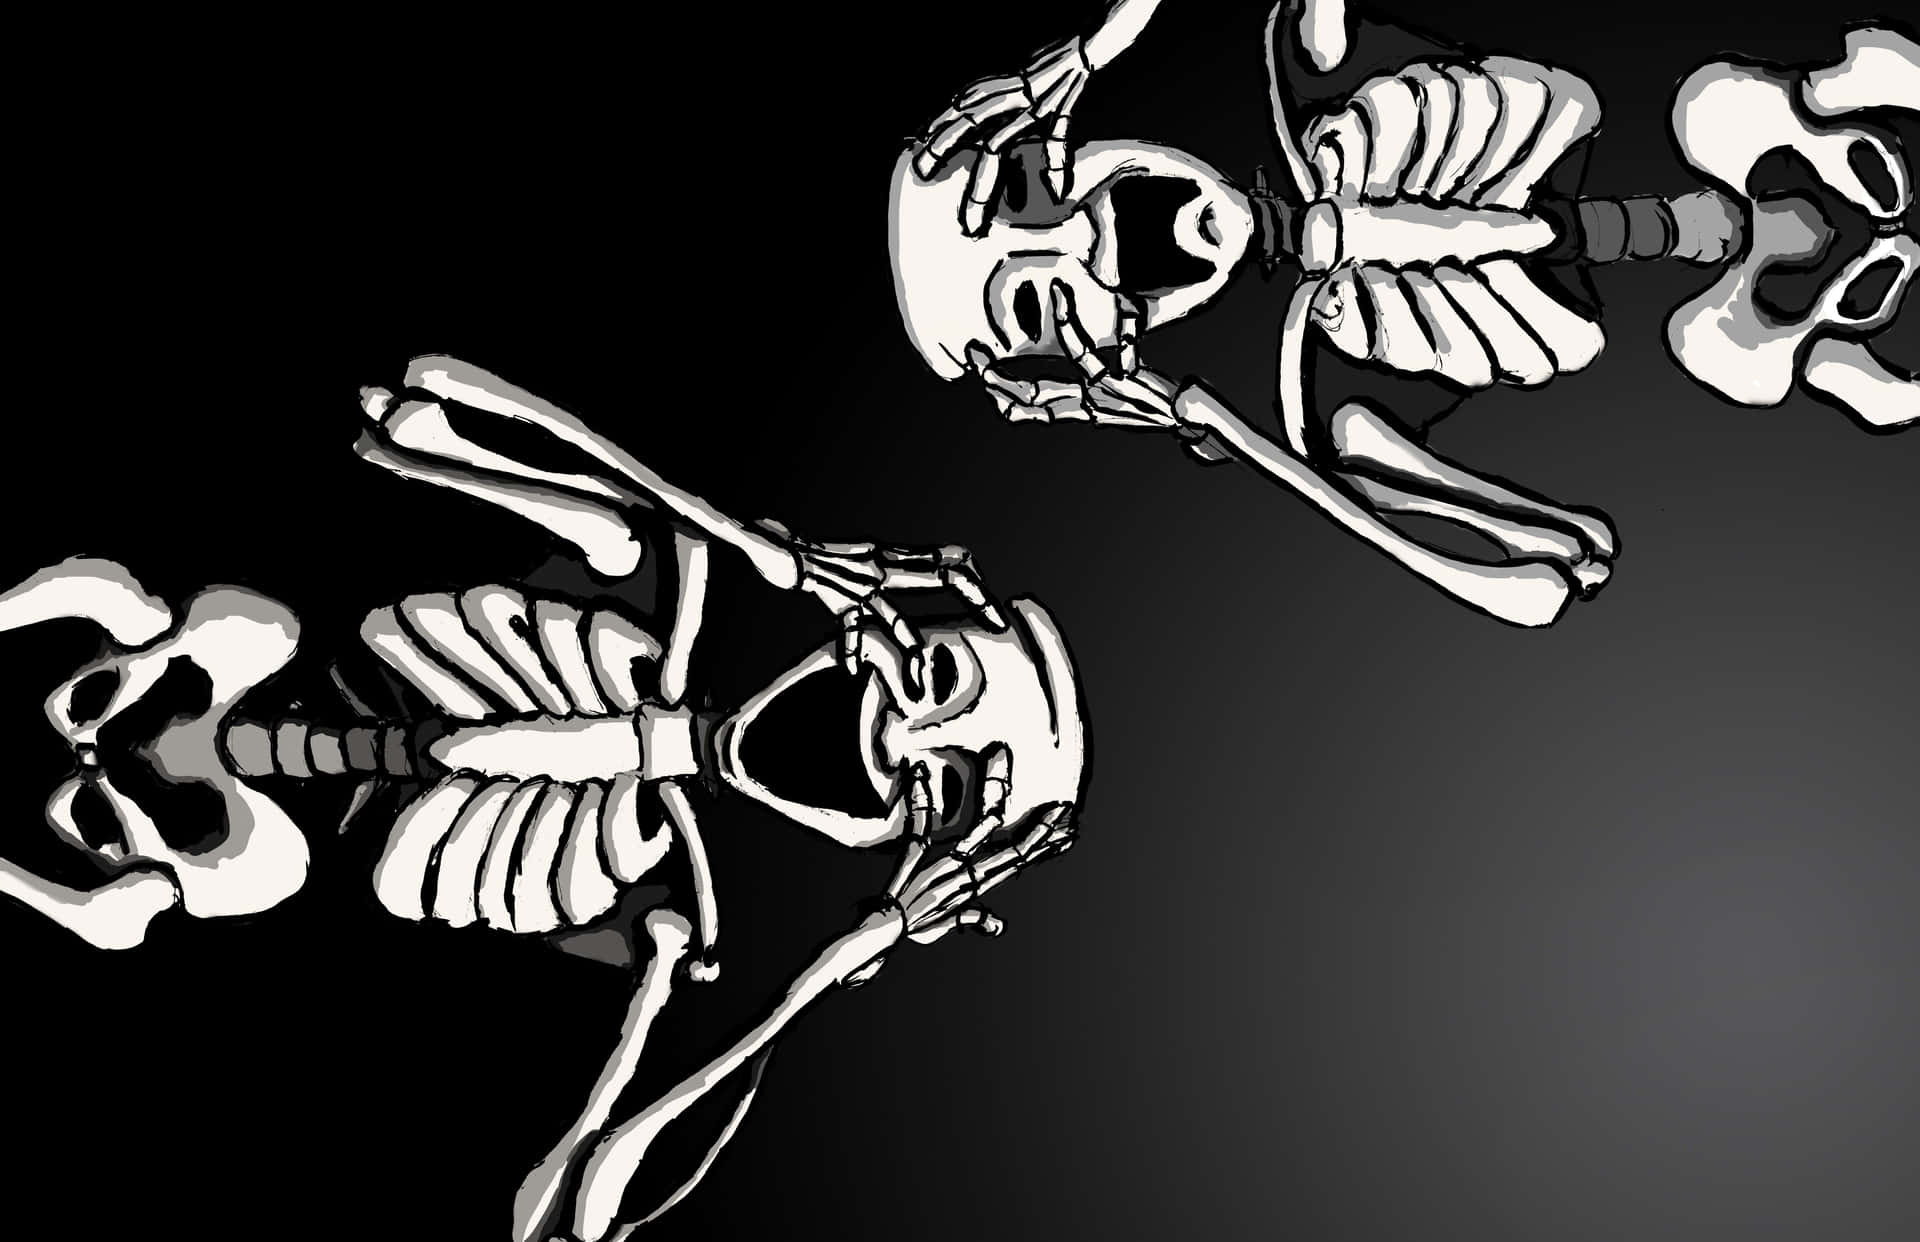 Spooky Halloween Skeleton Shrouded in Darkness Wallpaper